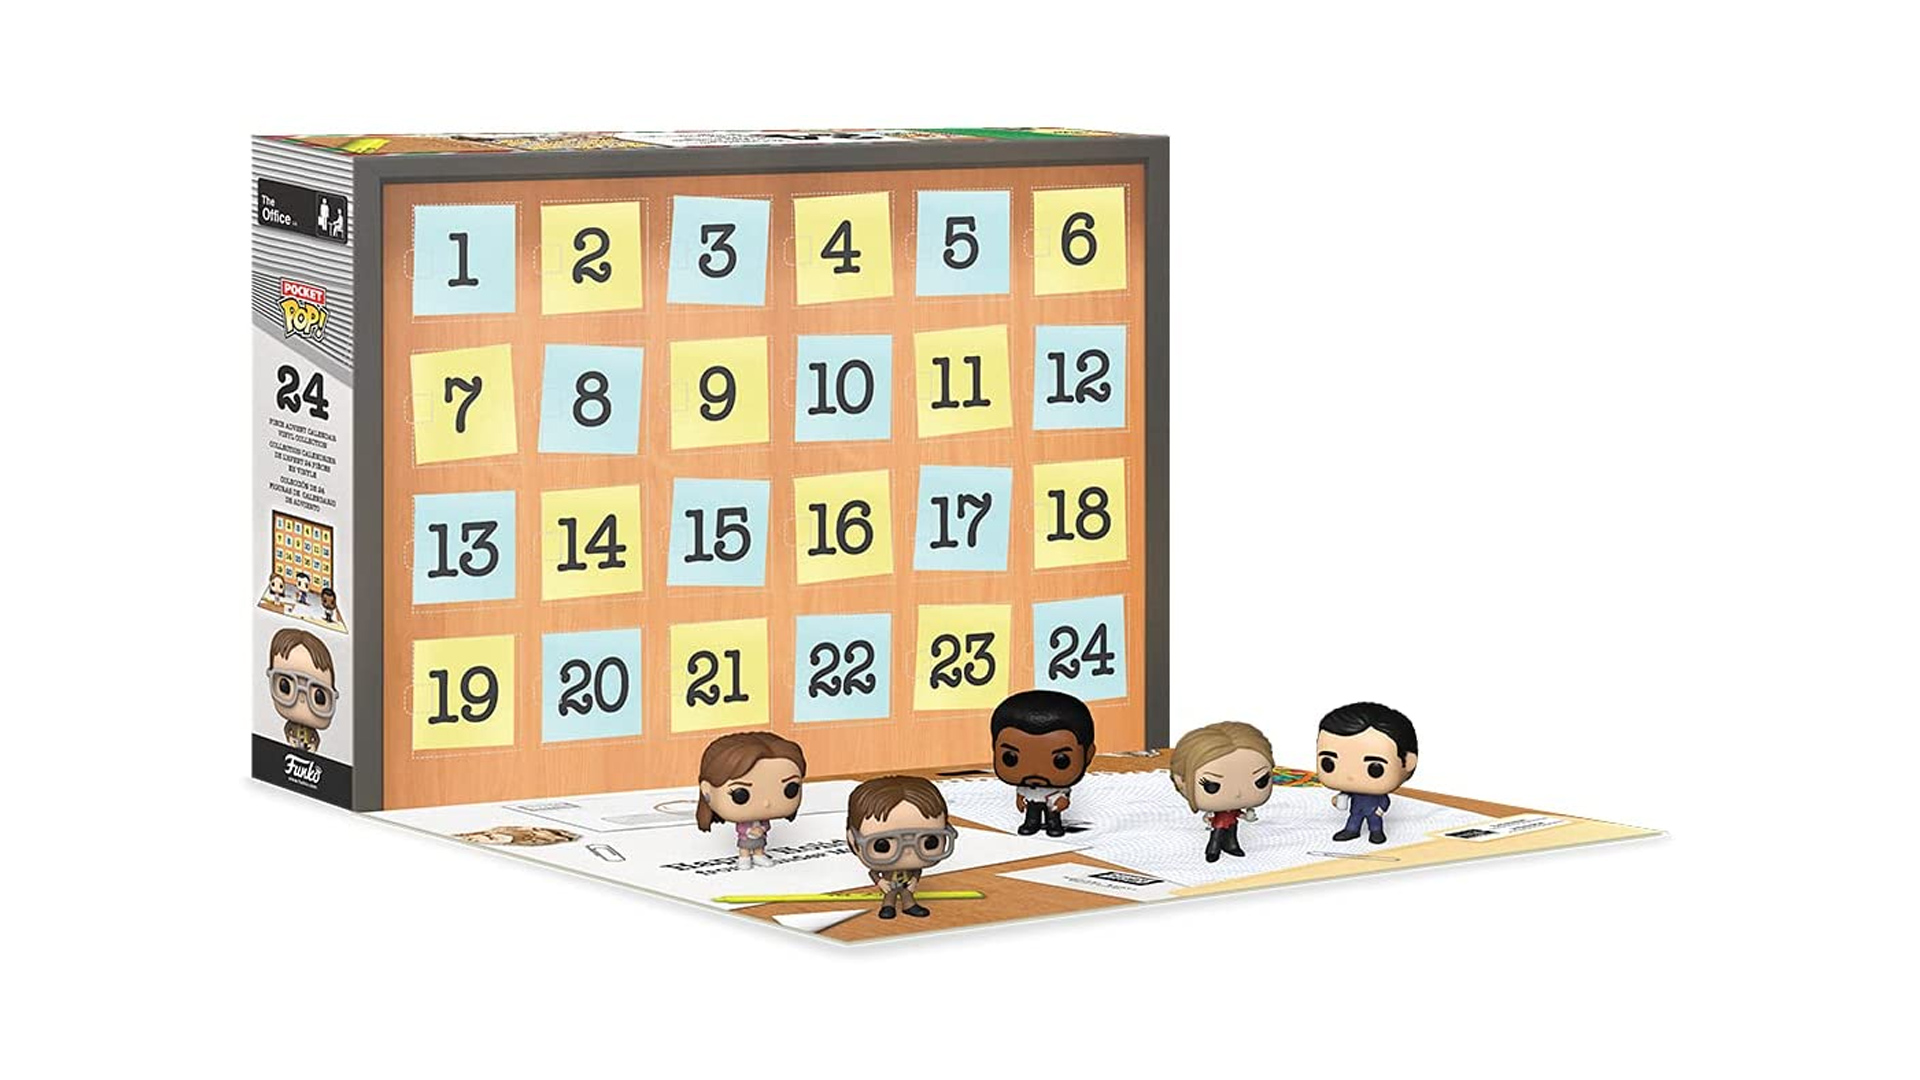 Funko POP!'s The Office advent calendar includes 24 unique figures at